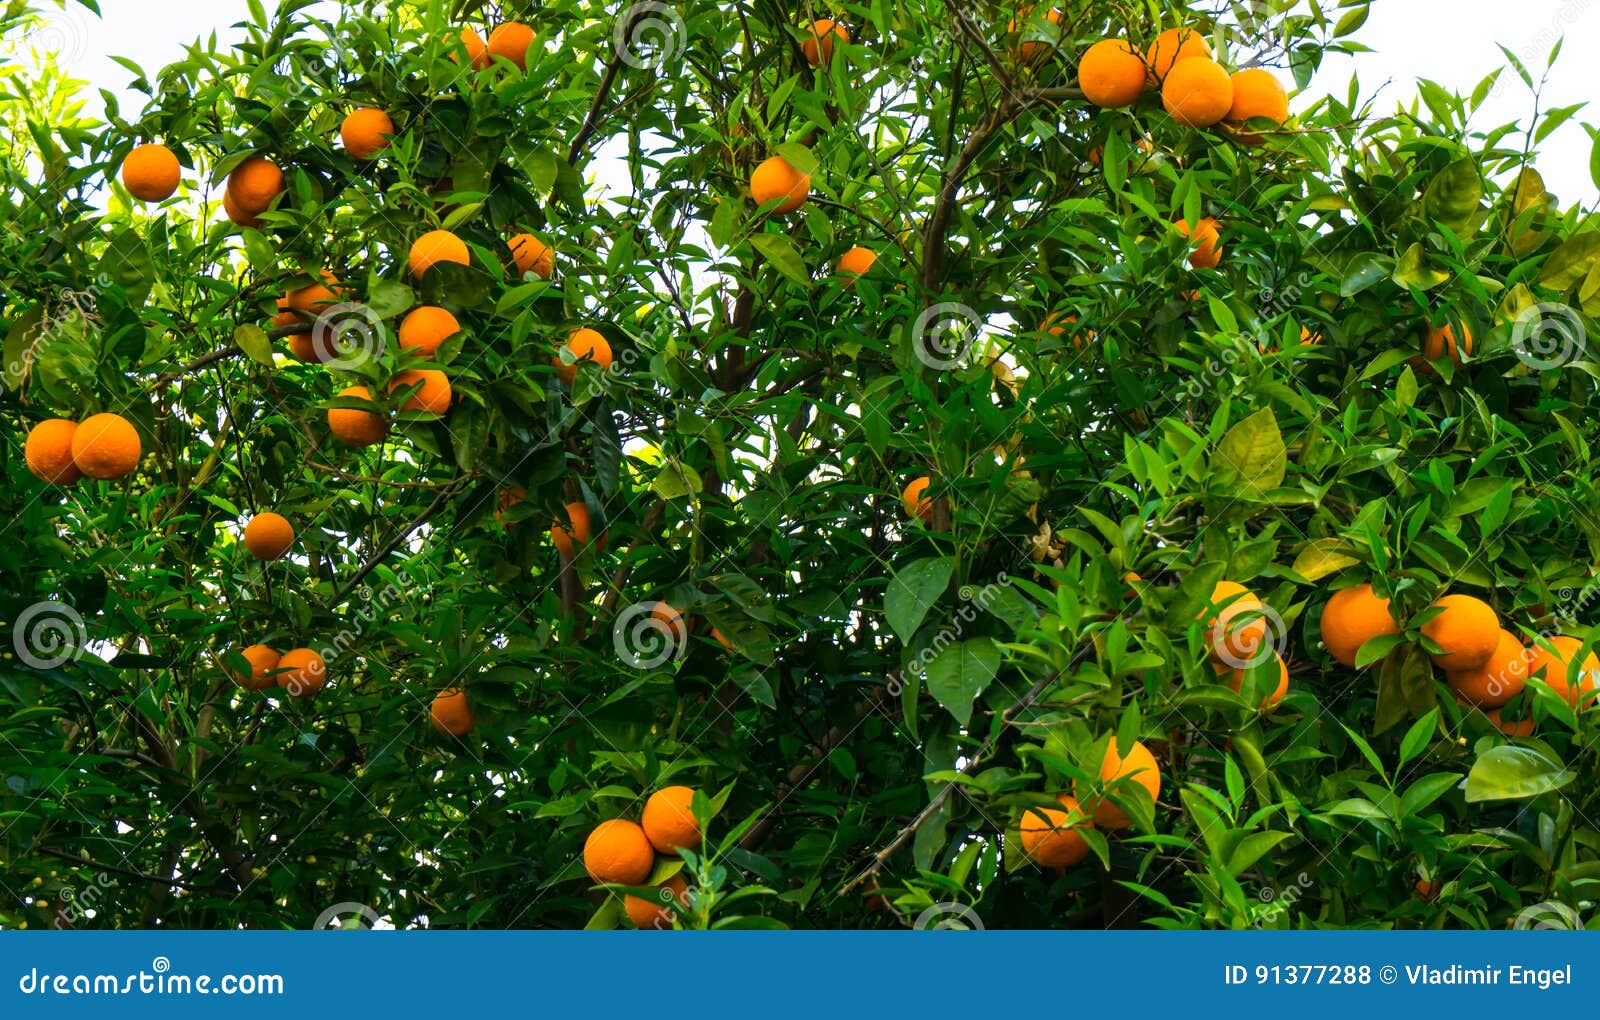 1000 Orange Tree Pictures  Download Free Images on Unsplash